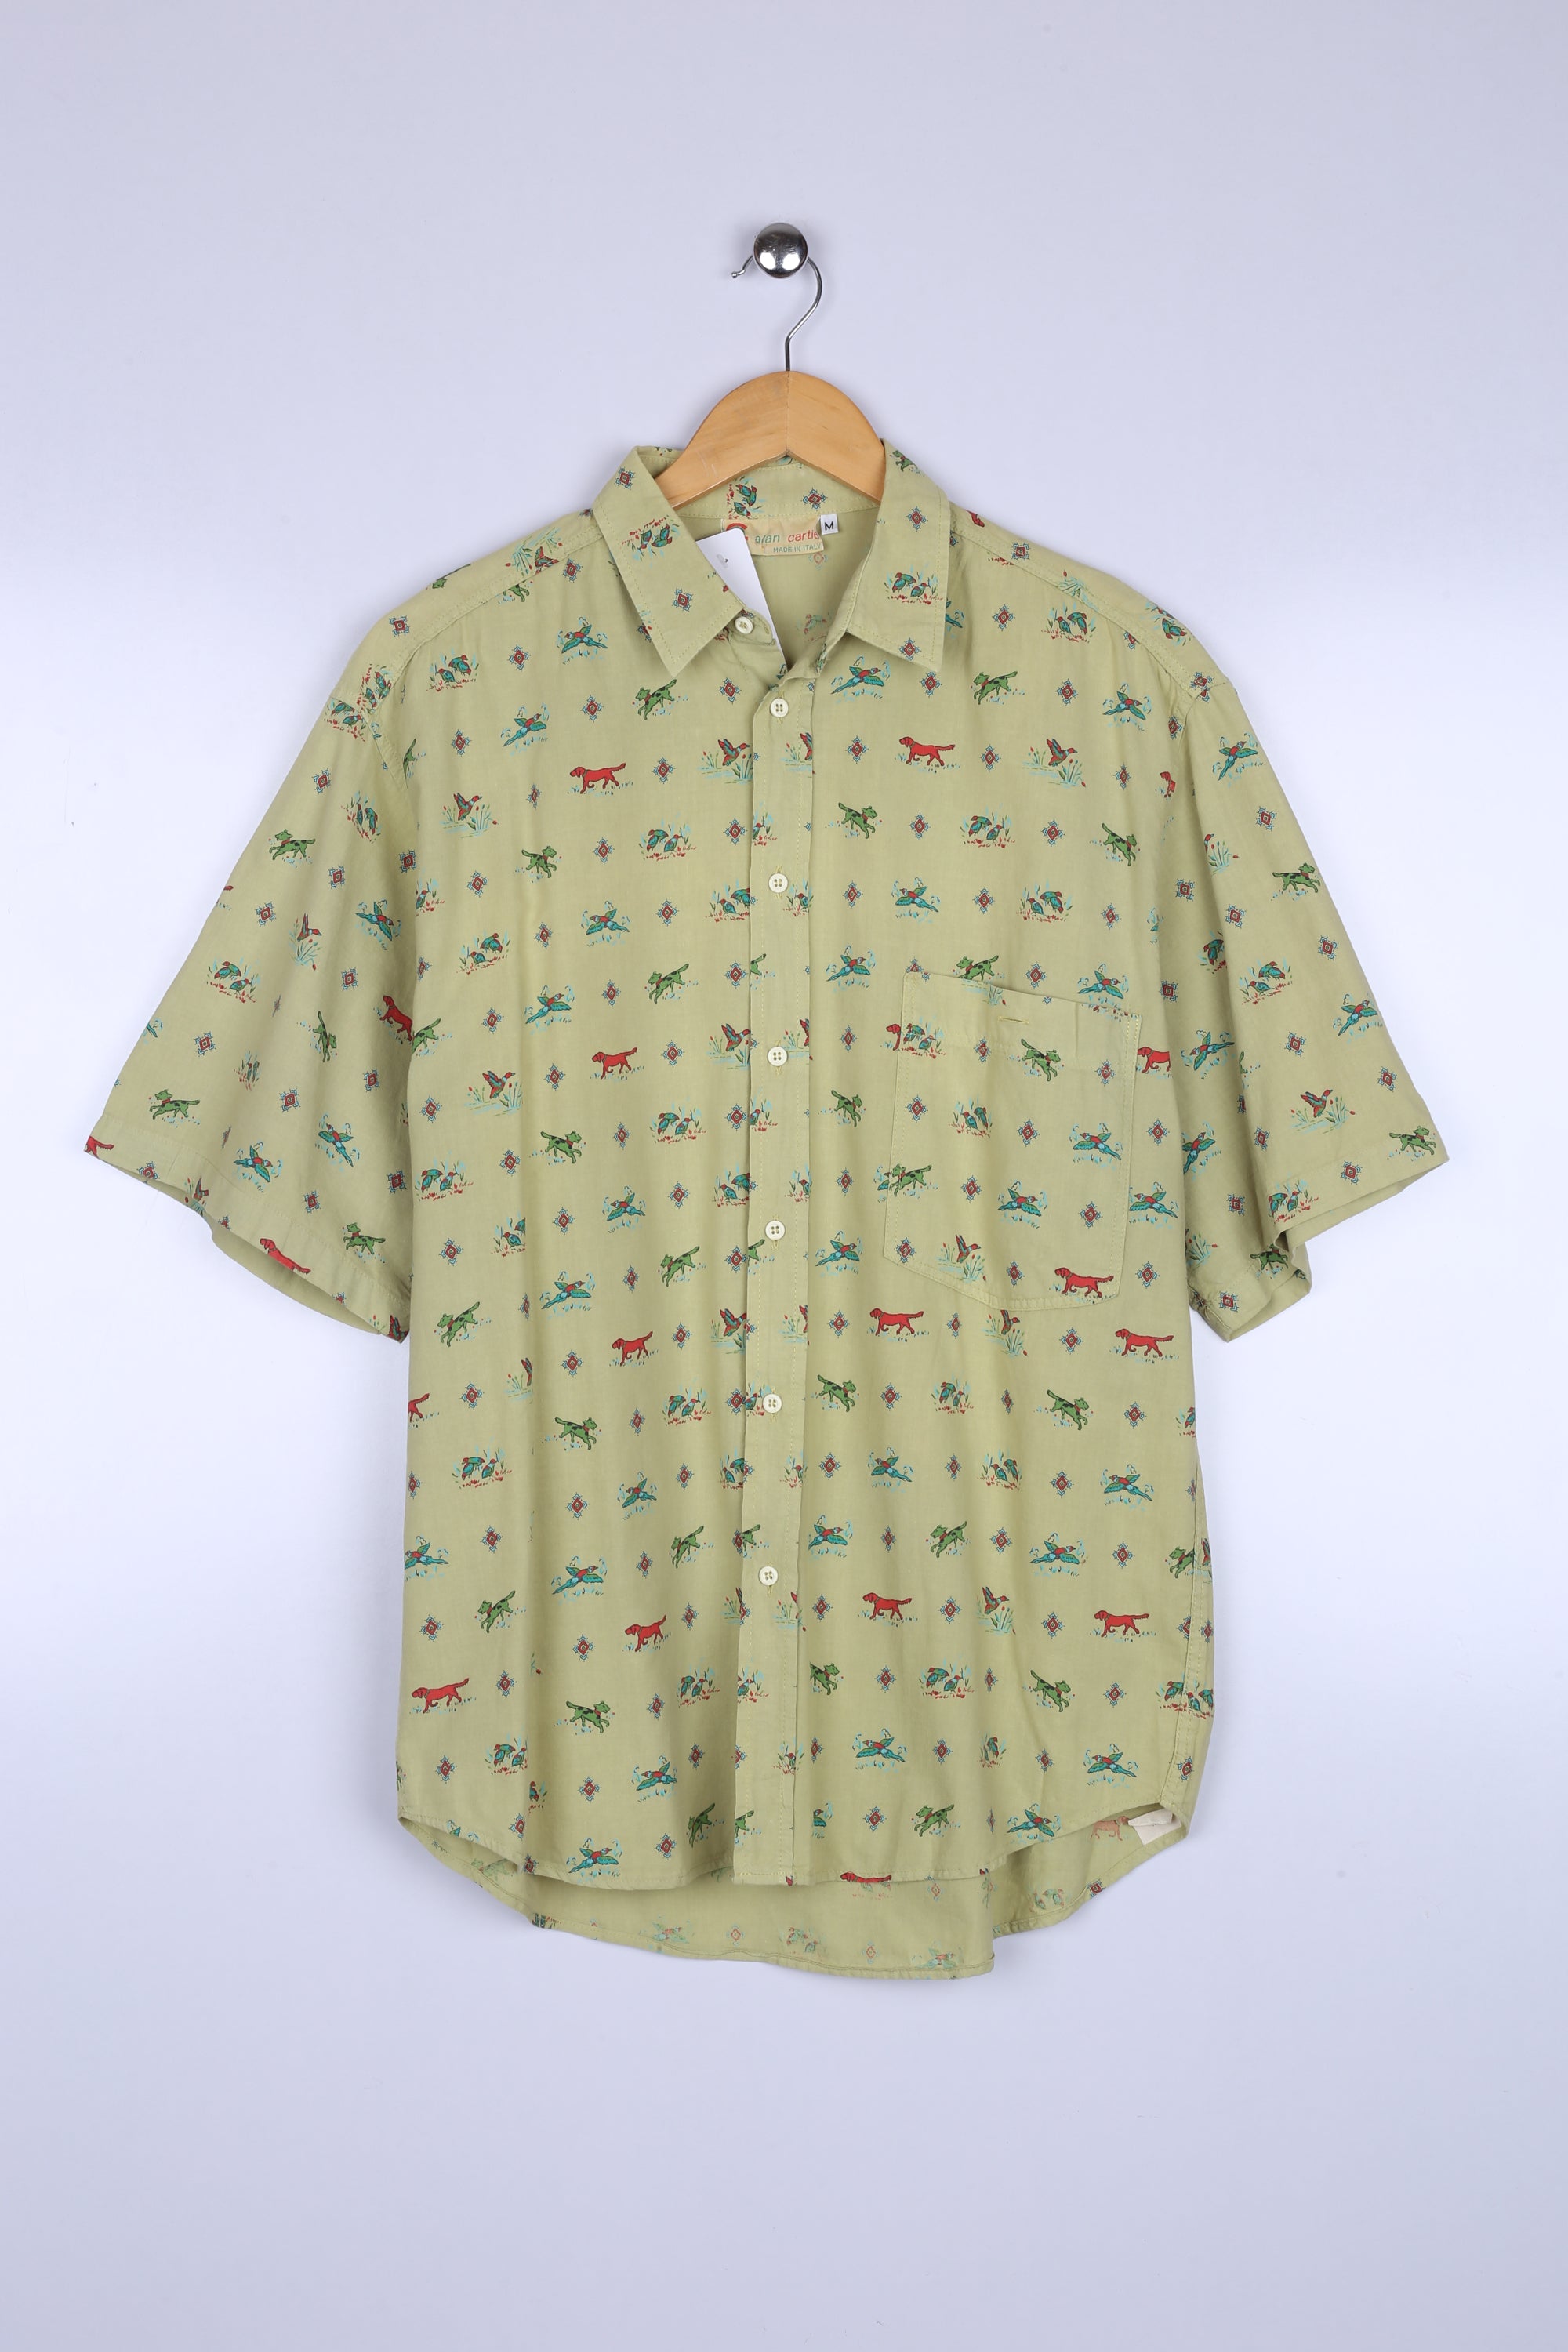 Vintage Hawaiin Printed Shirt Animals